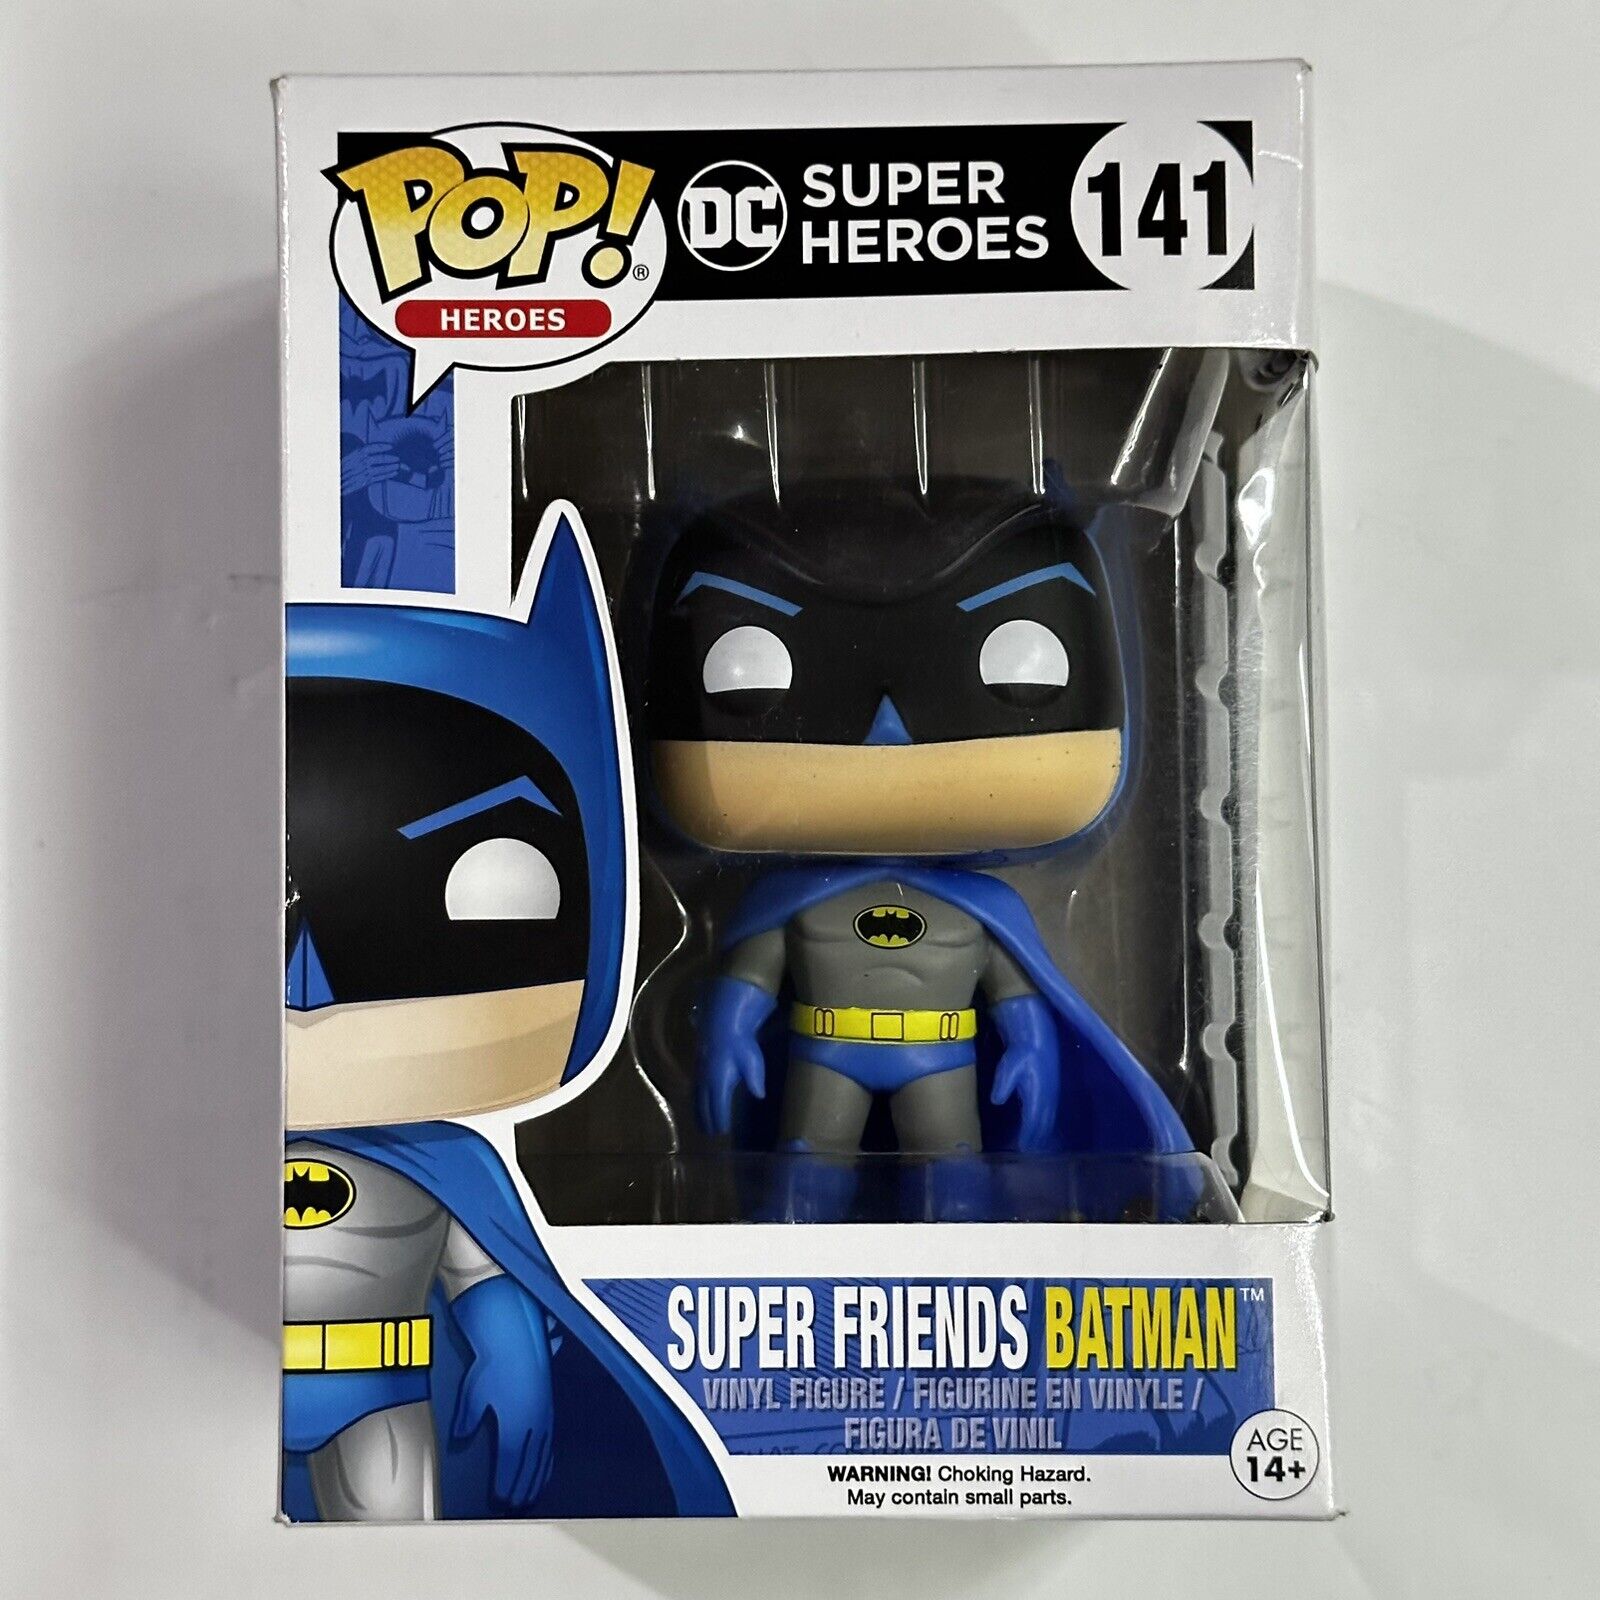 Funko Pop Heroes DC Super Heroes Super Friends Batman #141 Vaulted